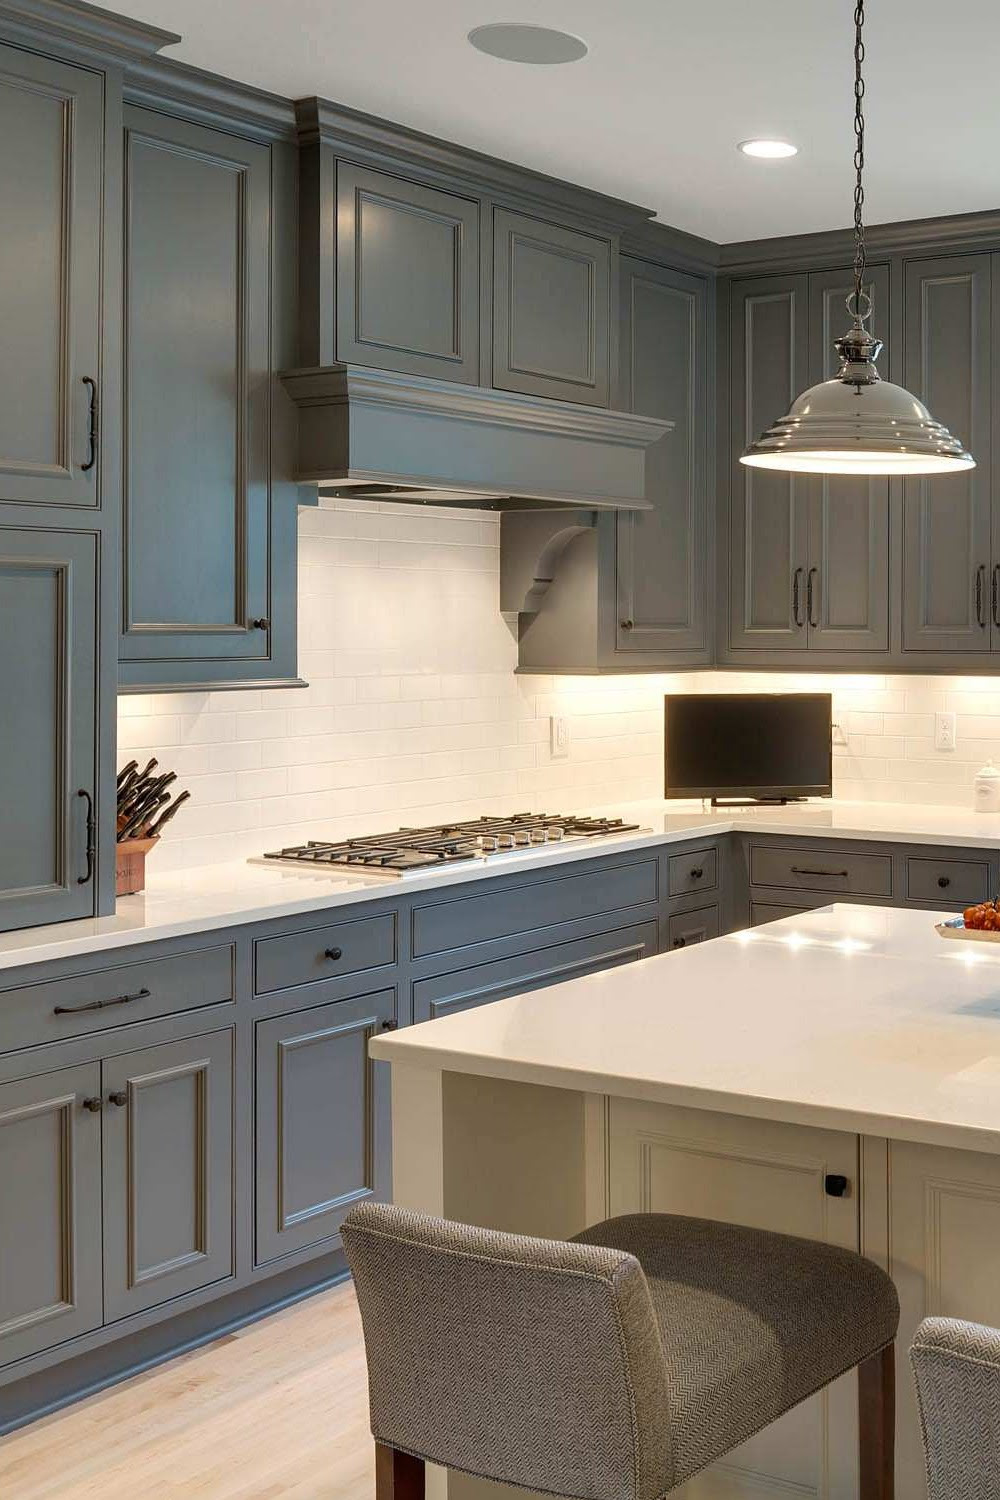 Scott zimmerman, modern kitchen with walnut cabinets and quartz counter top. 35 Gray Kitchen Cabinets Ideas For Dark Or Light